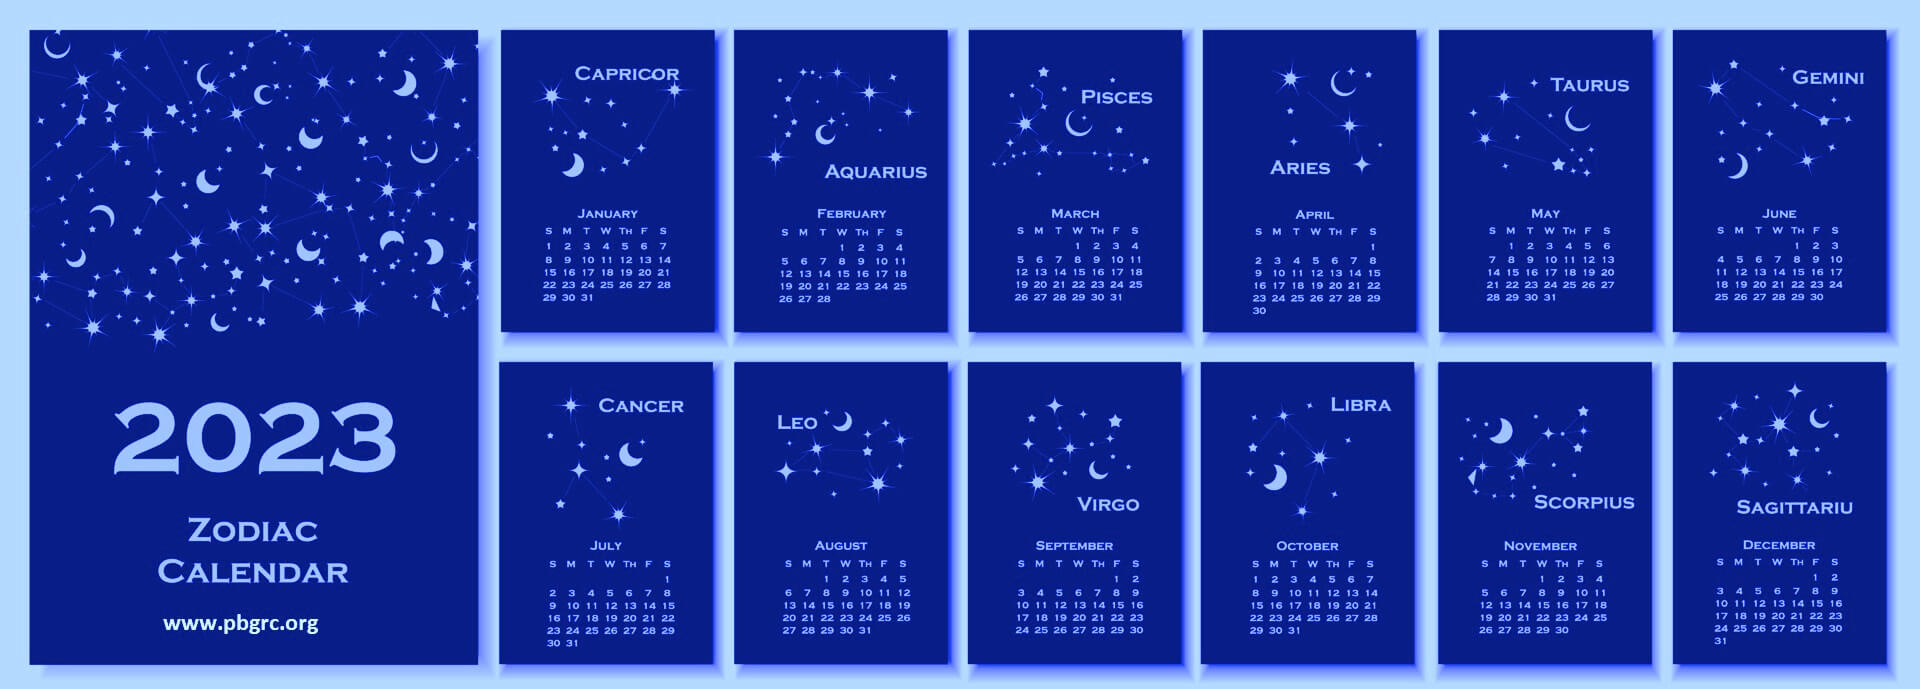 2023 Calendar with zodiac sign